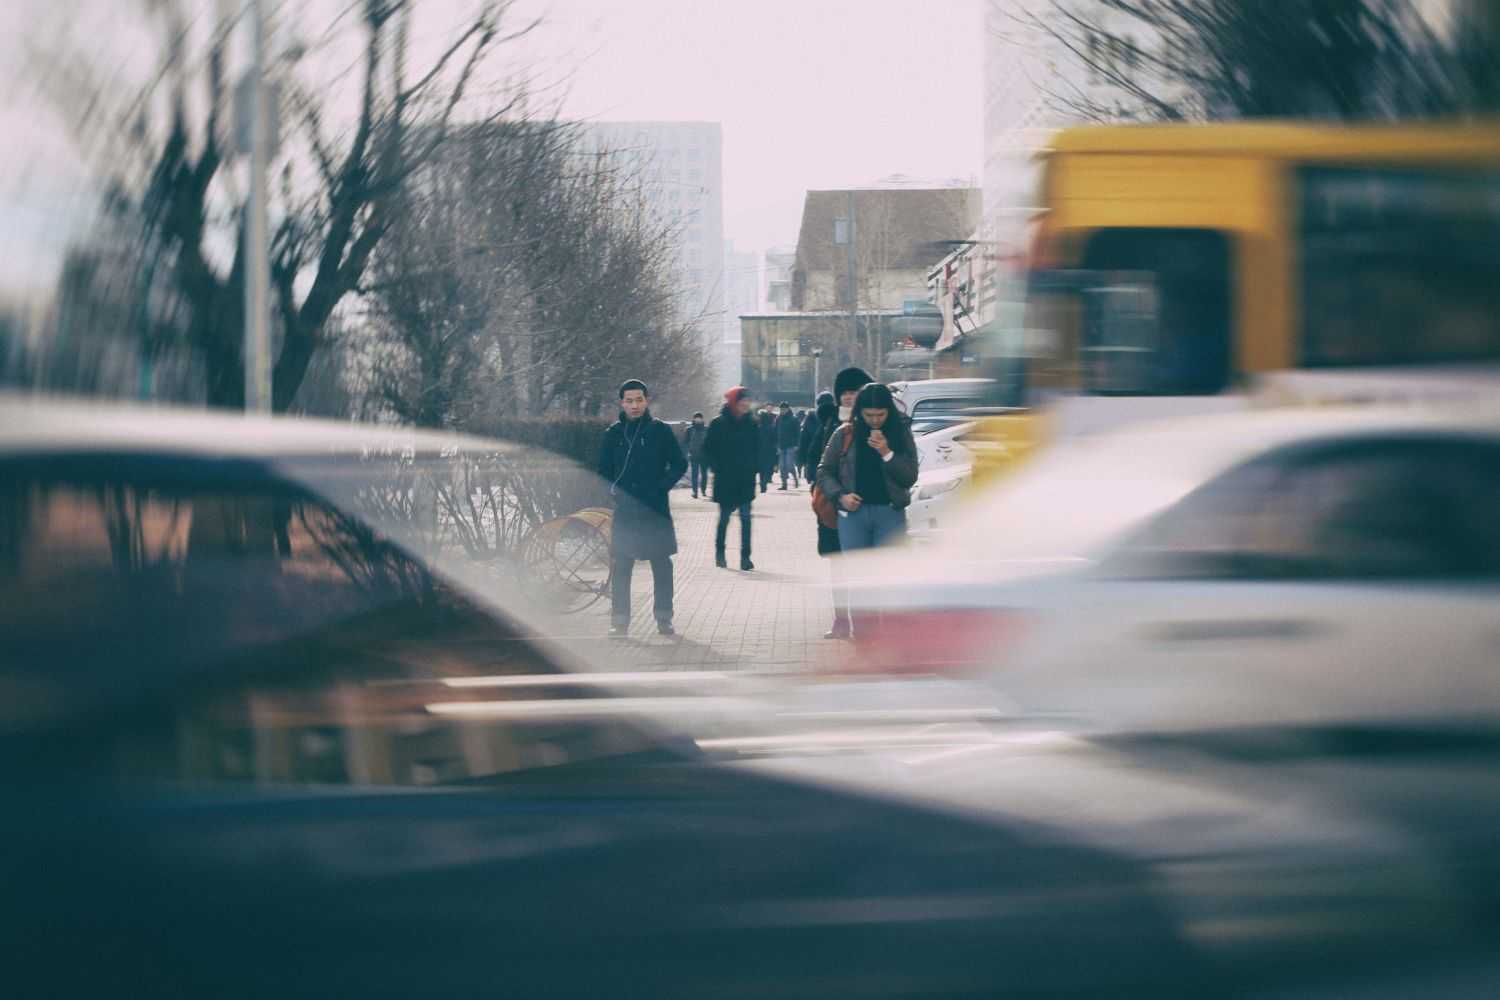 cars in slow motion Photo by Sane Sodbayar on unsplash